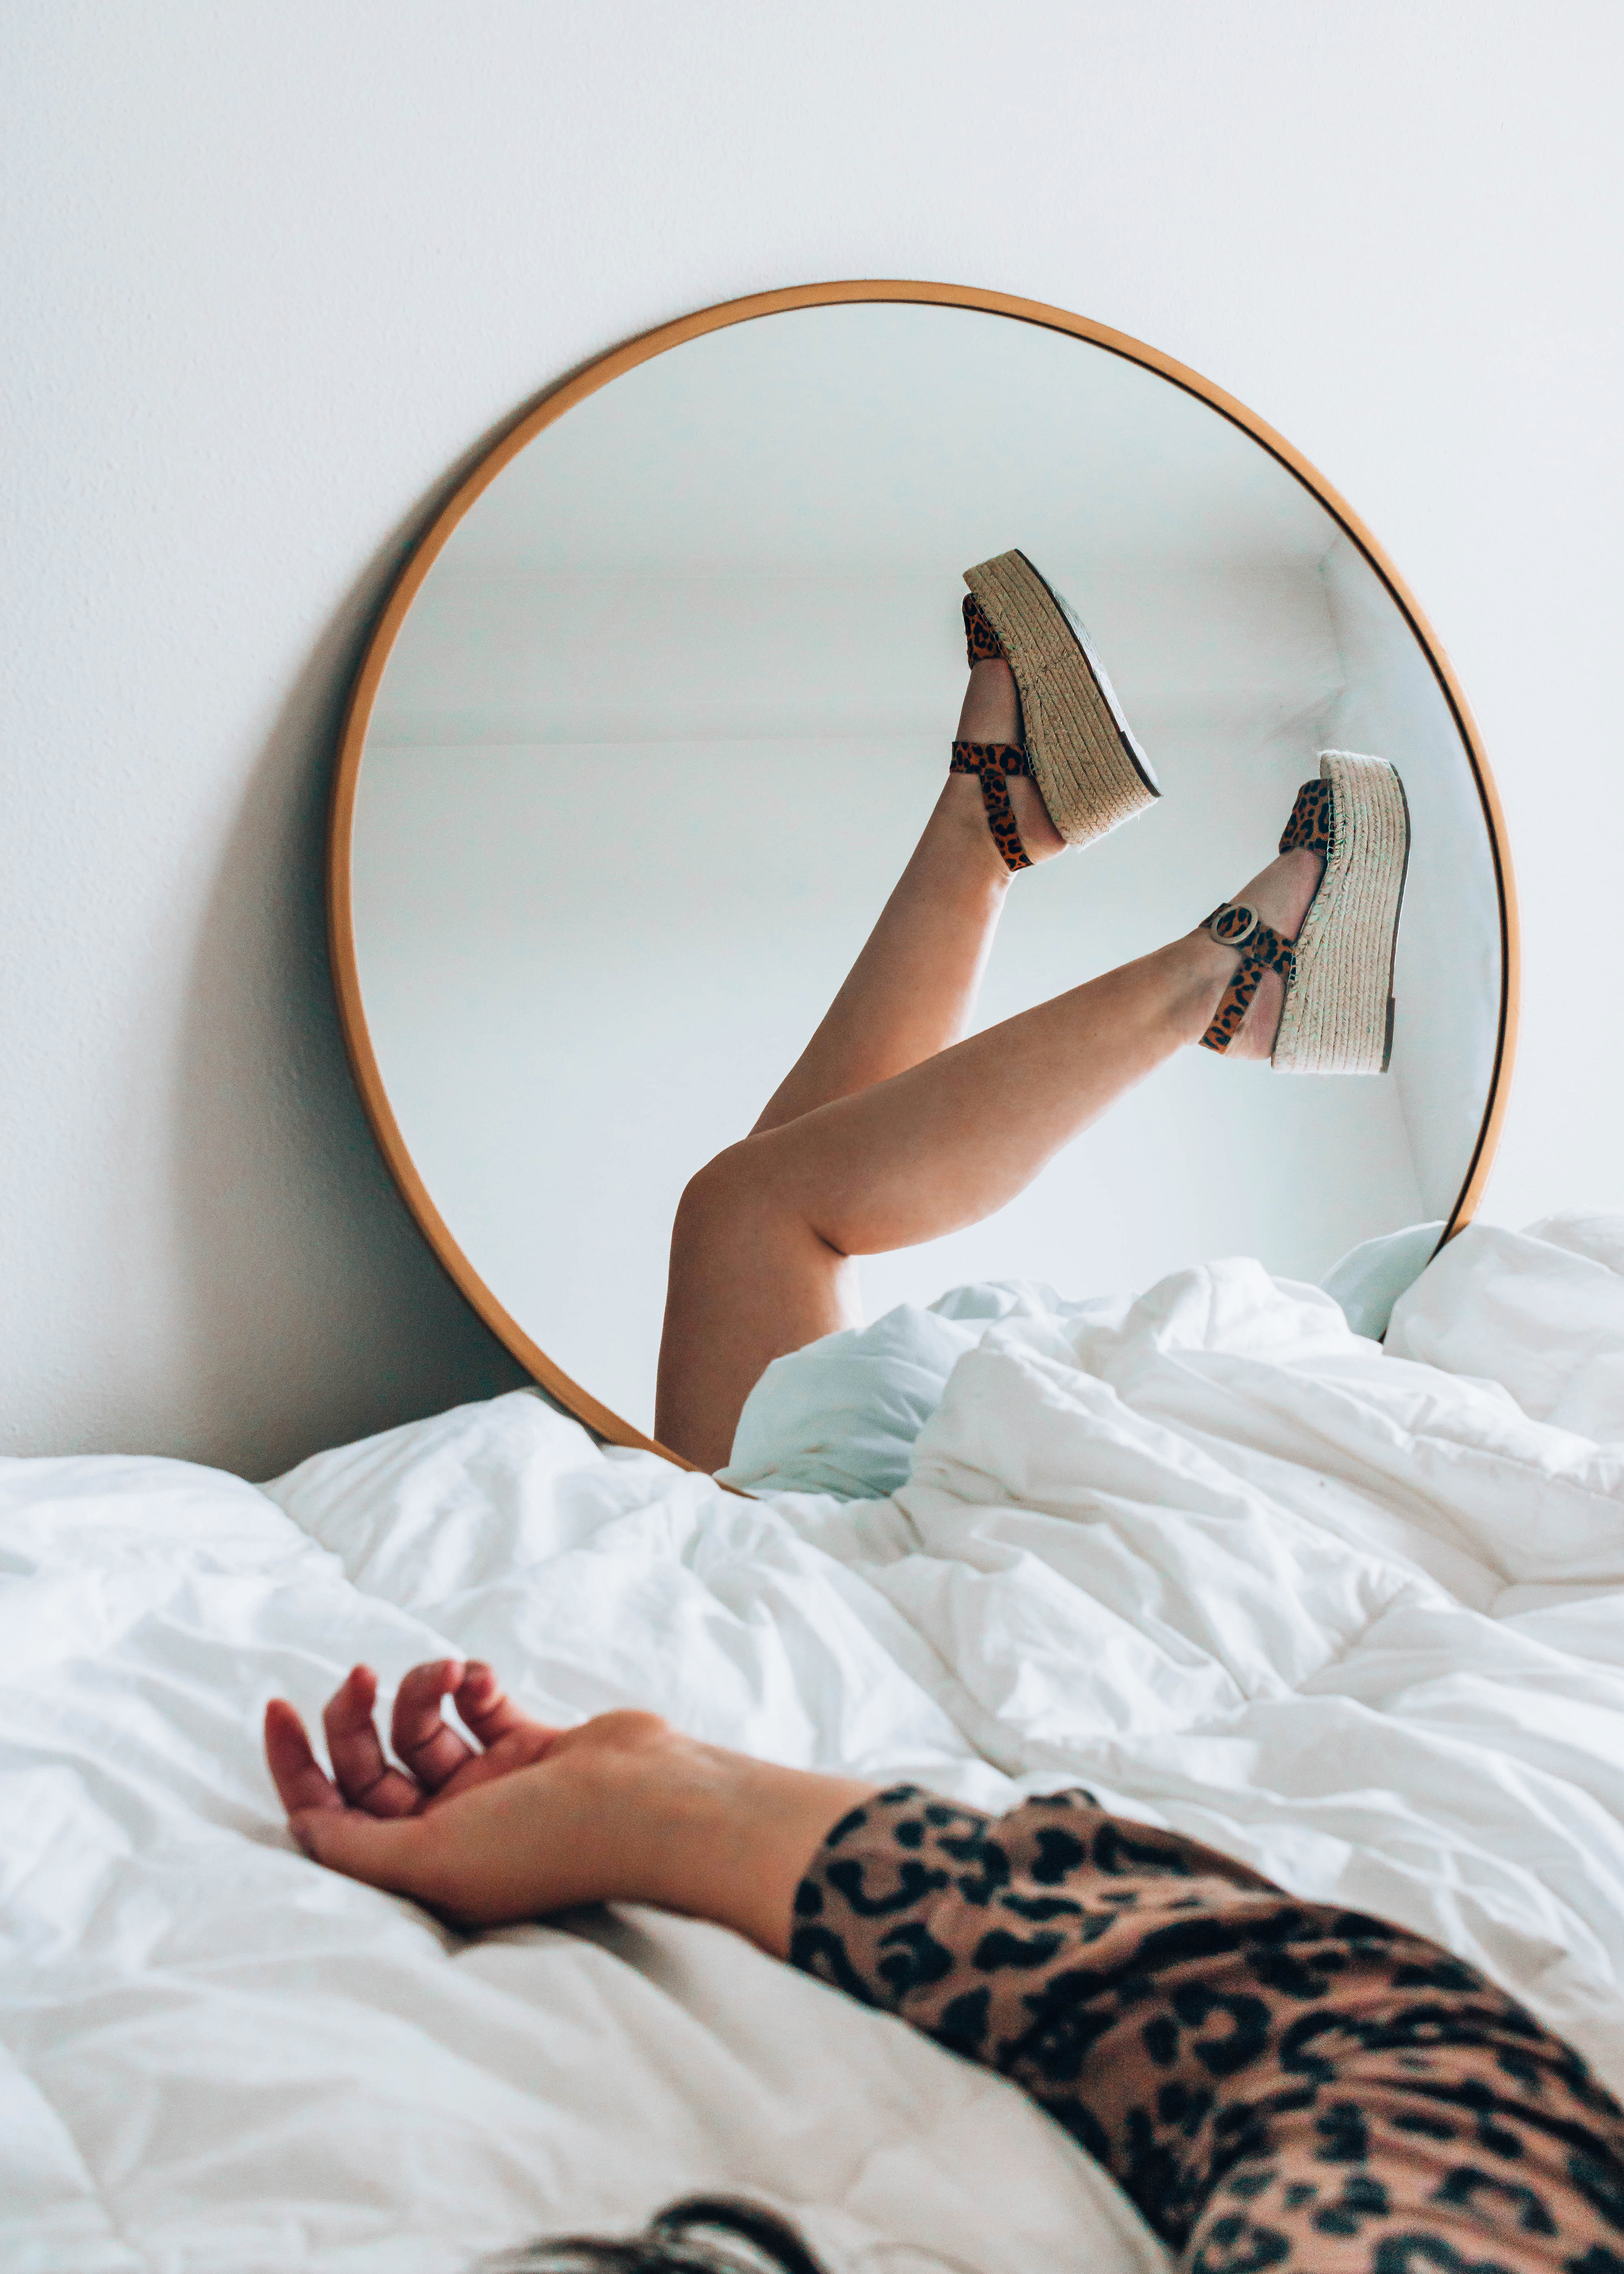 Beauty blogger's legs in a mirror. 